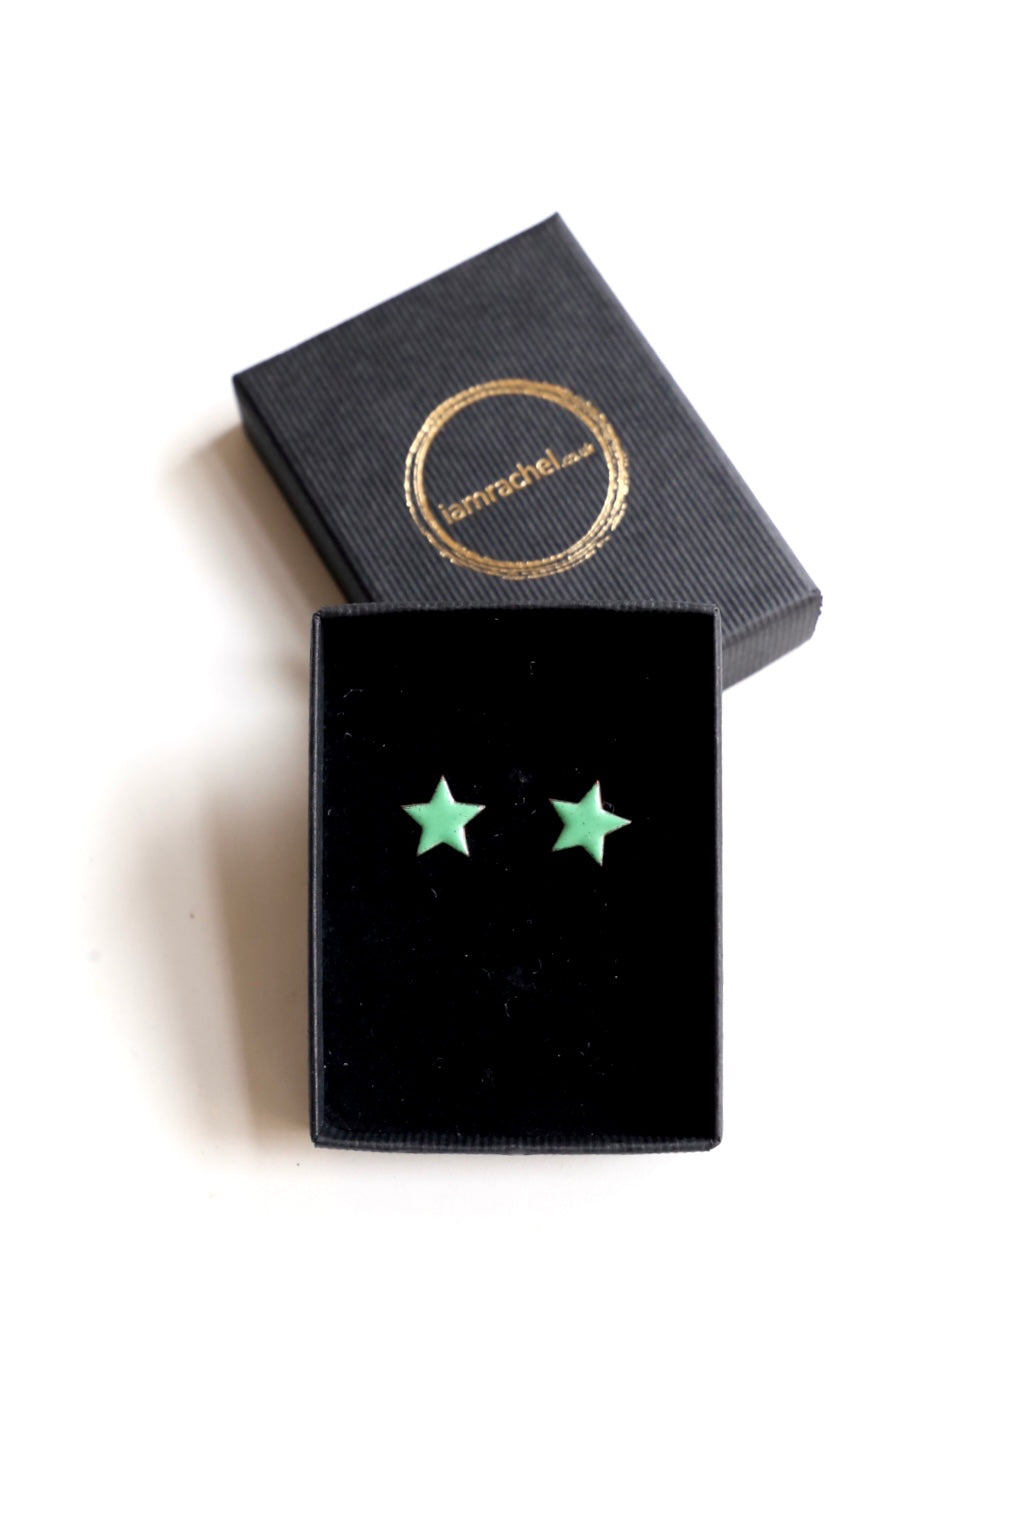 10mm mint green star shaped enamel studs